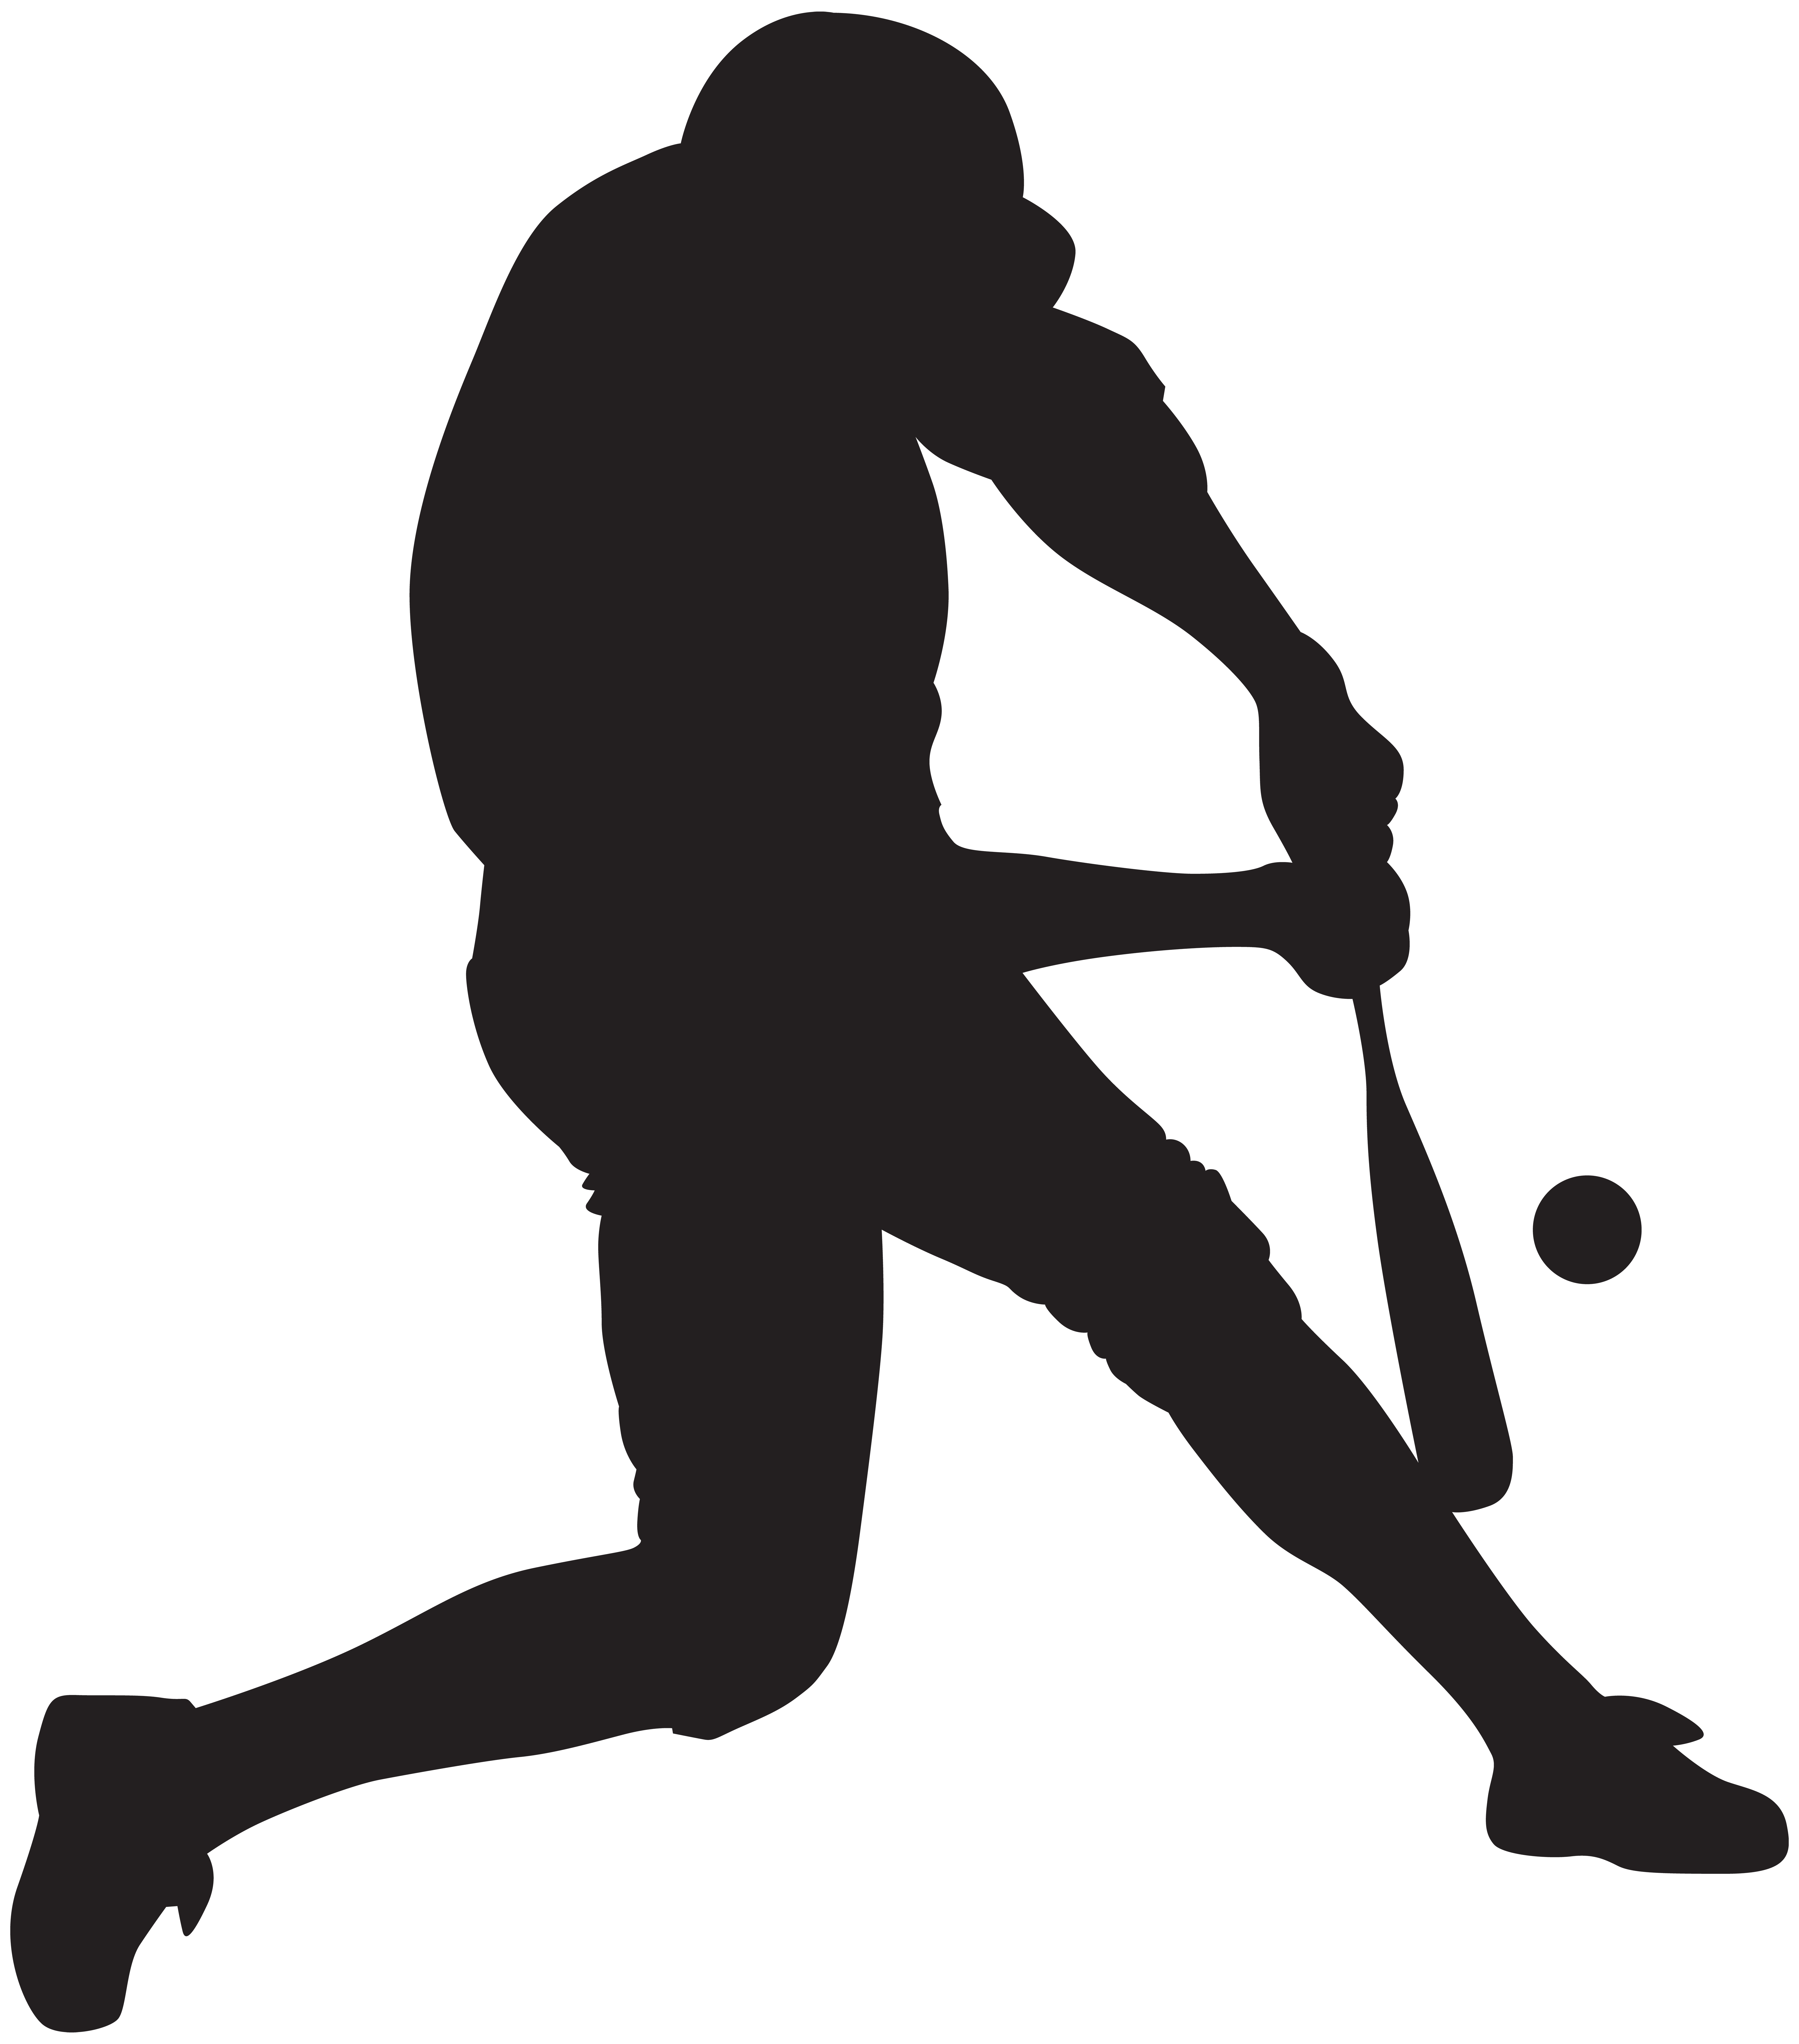 Baseball player silhouette.